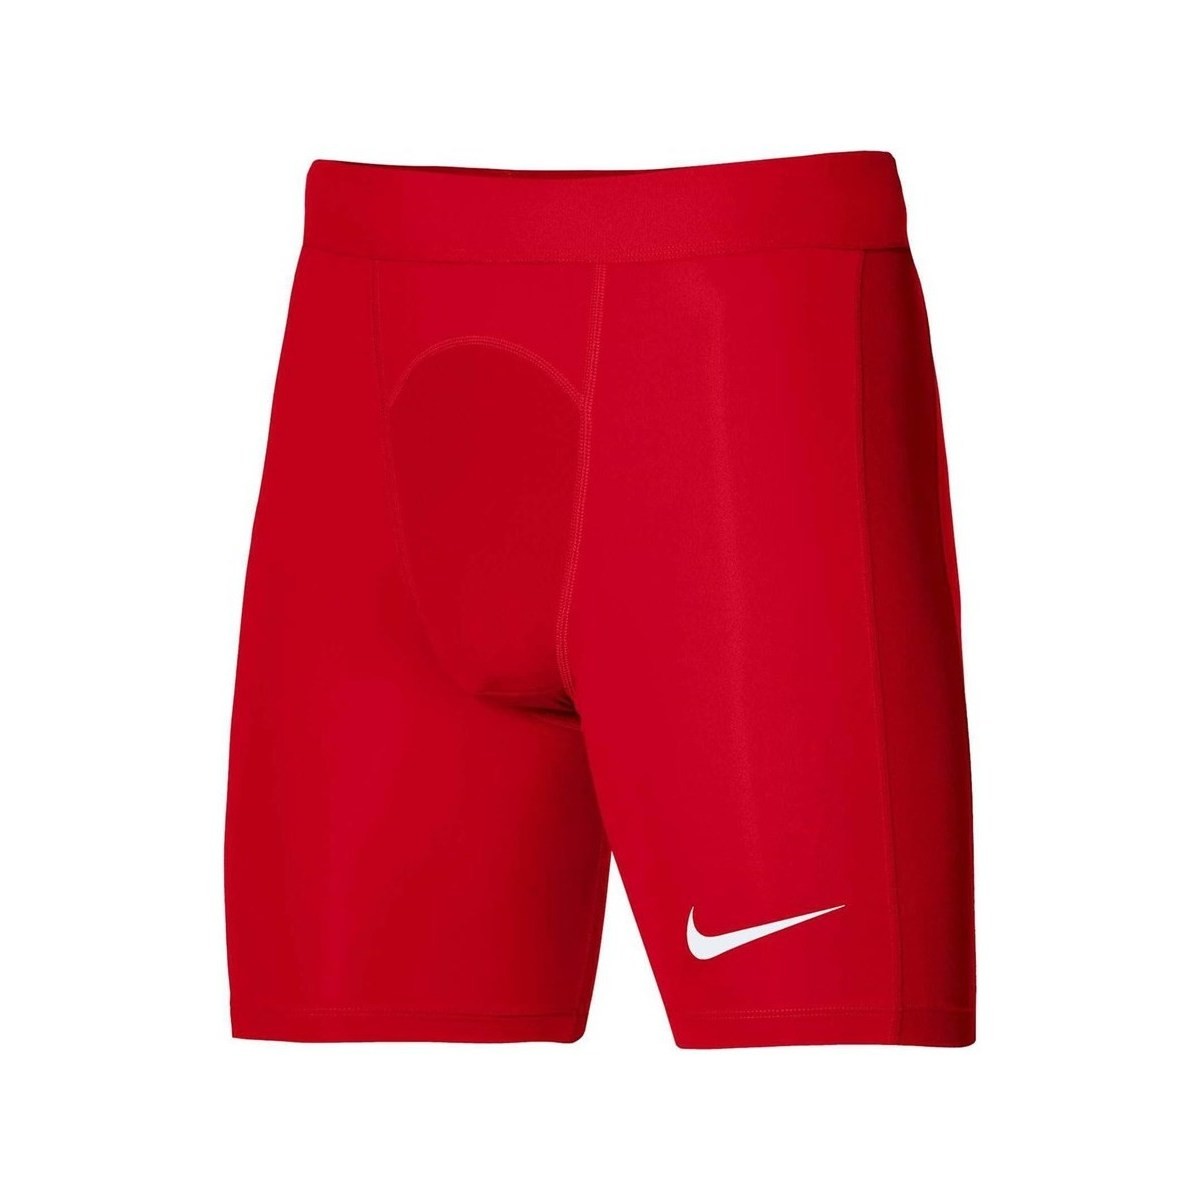 Îmbracaminte Bărbați Pantaloni trei sferturi Nike Pro Drifit Strike roșu